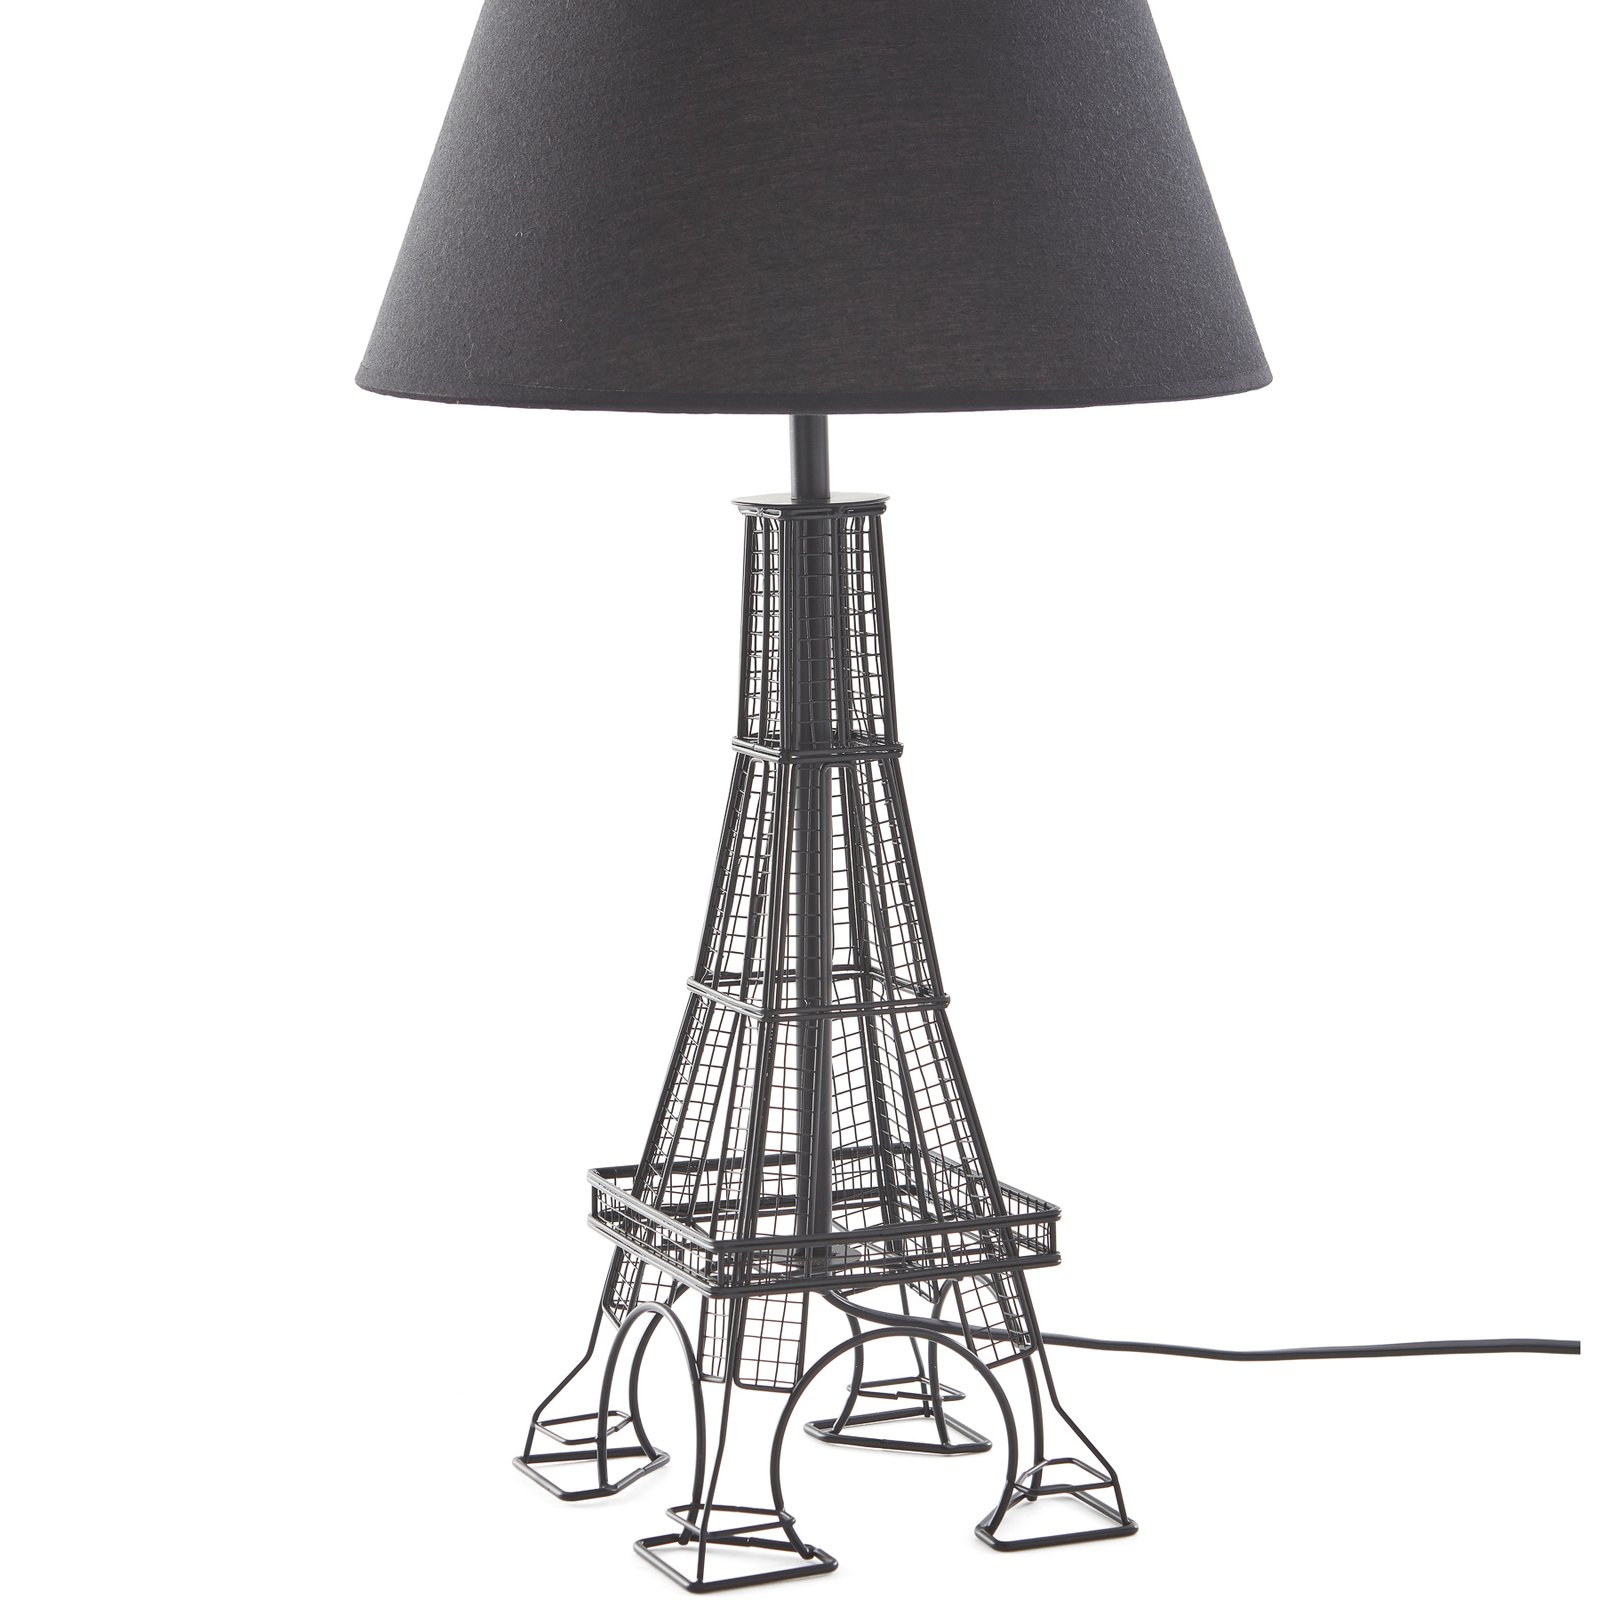 Lindby Croia tafellamp, zwart, metaal, Ø 28 cm, E27